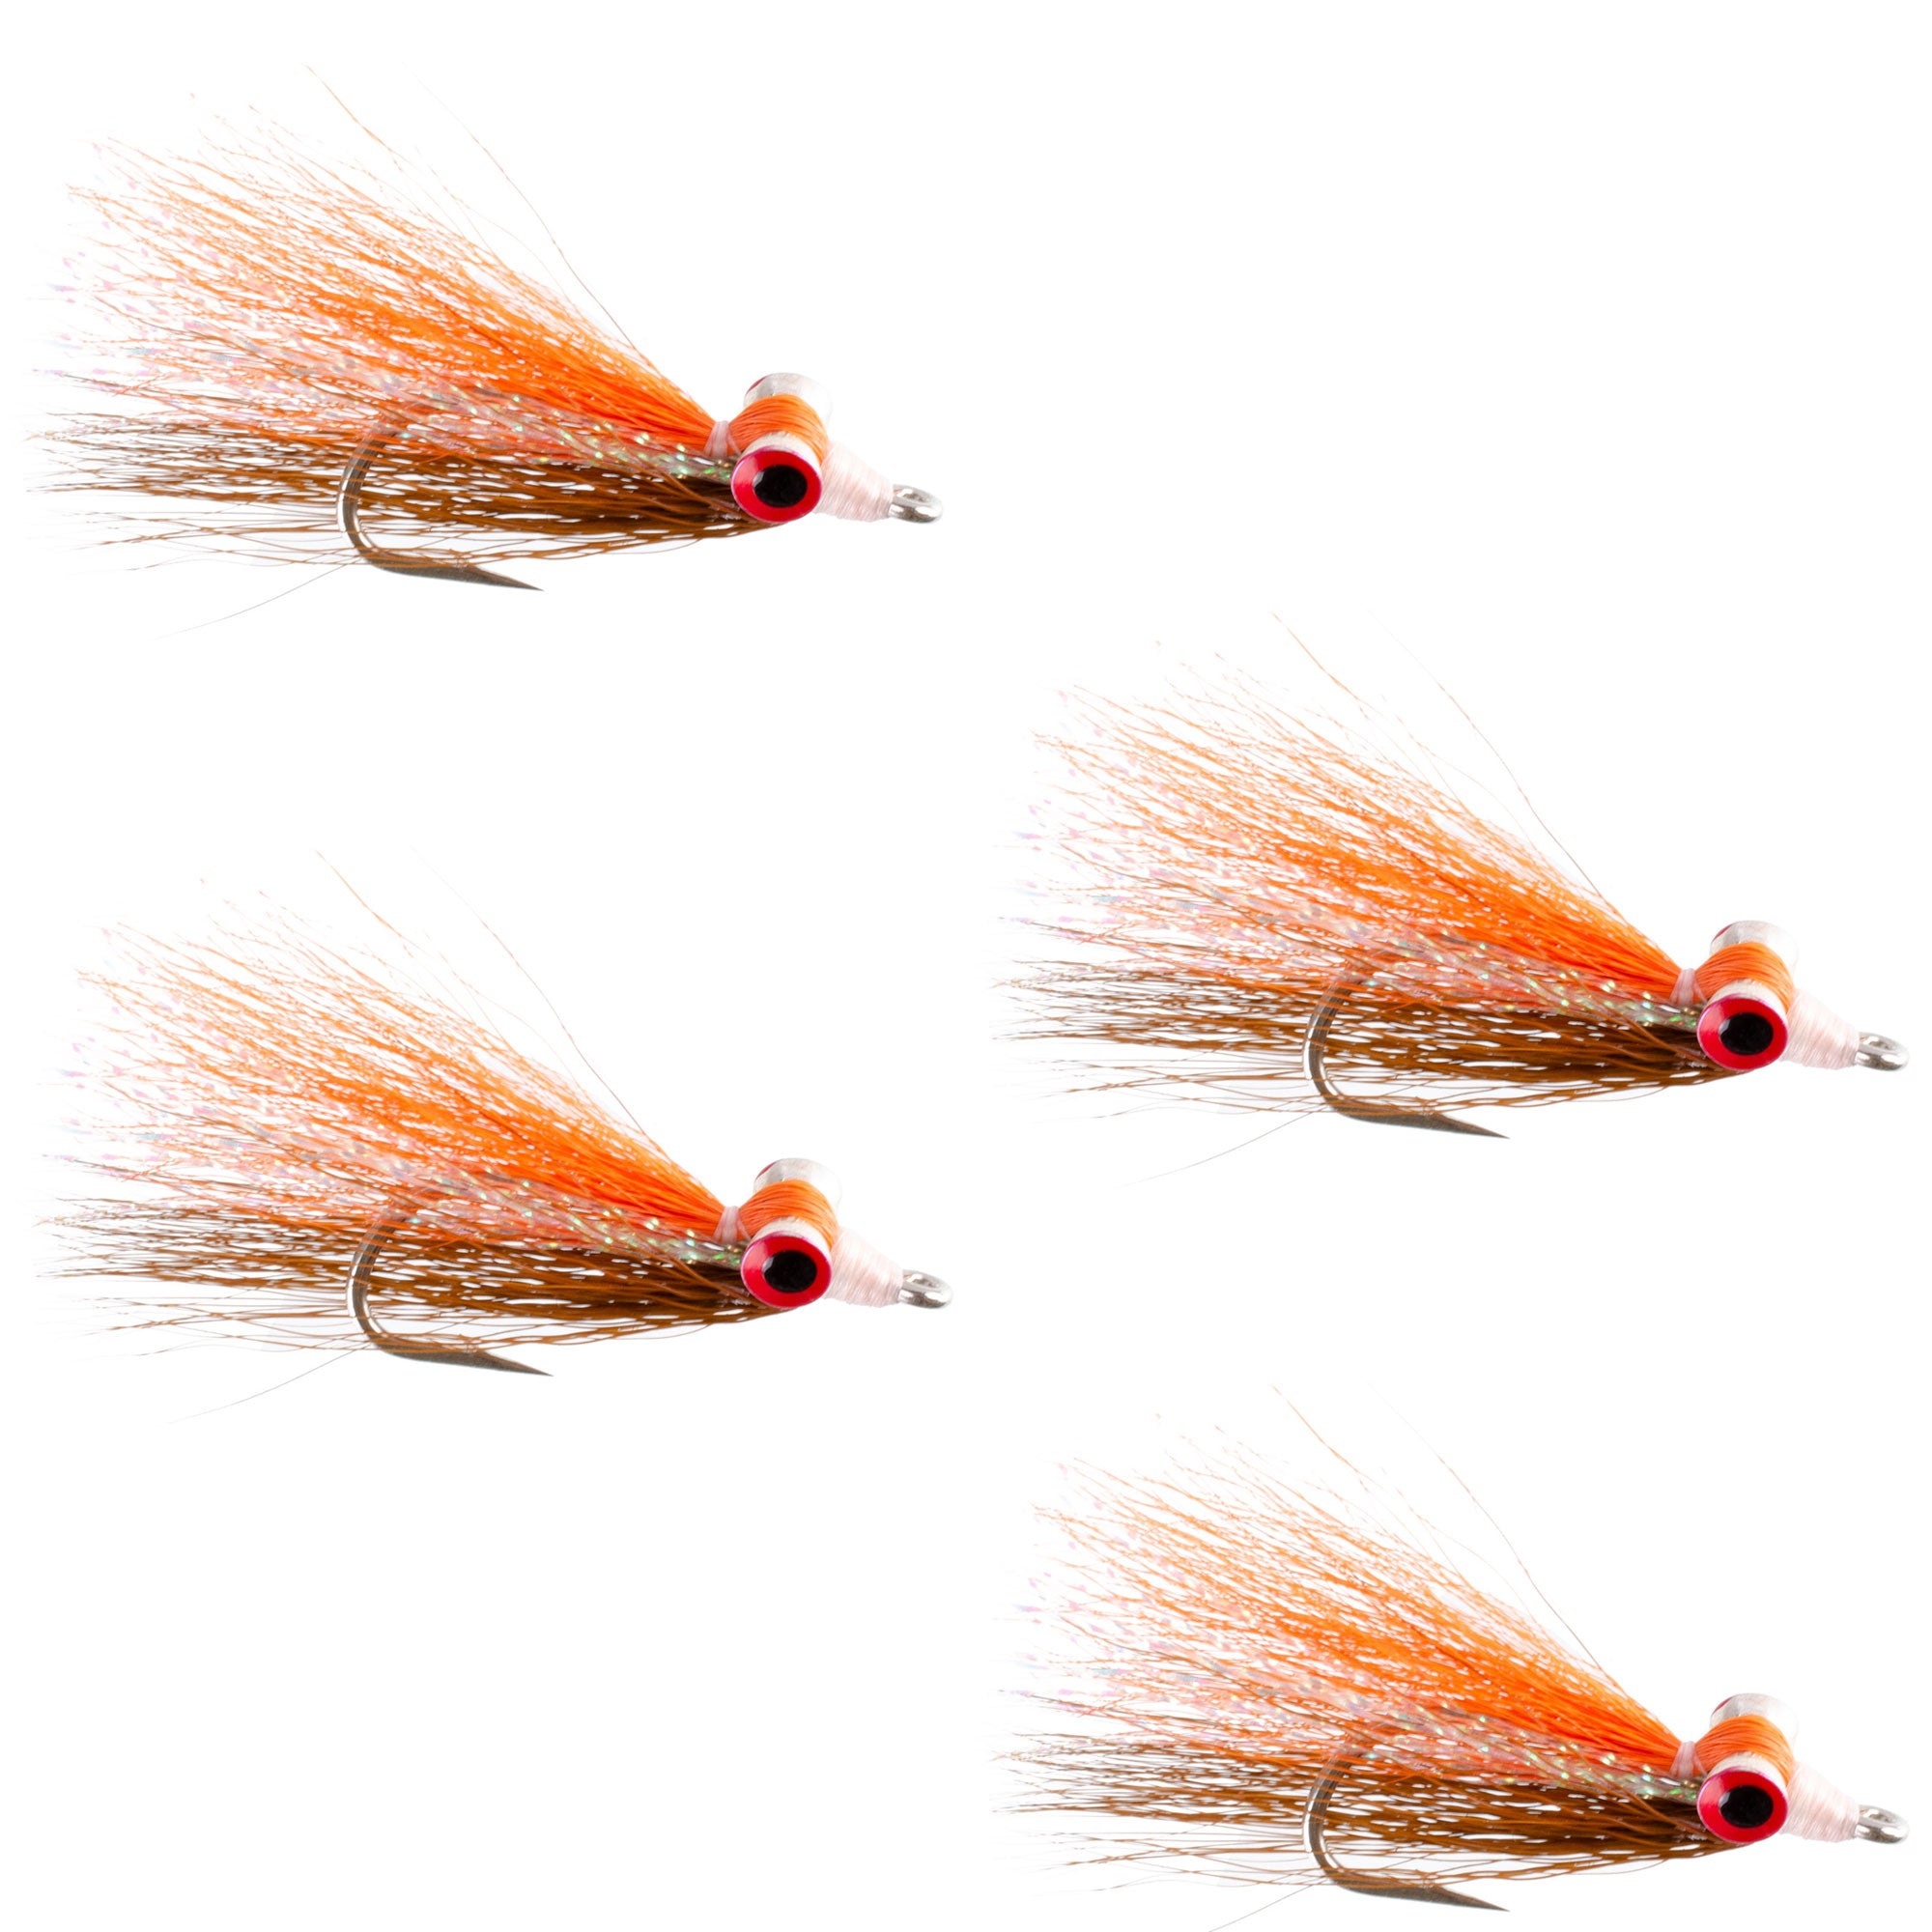 Clousers Deep Minnow Brown Orange Sunfish - Streamer Fly Fishing Flies - 4 Saltwater and Bass Flies - Hook Size 1/0